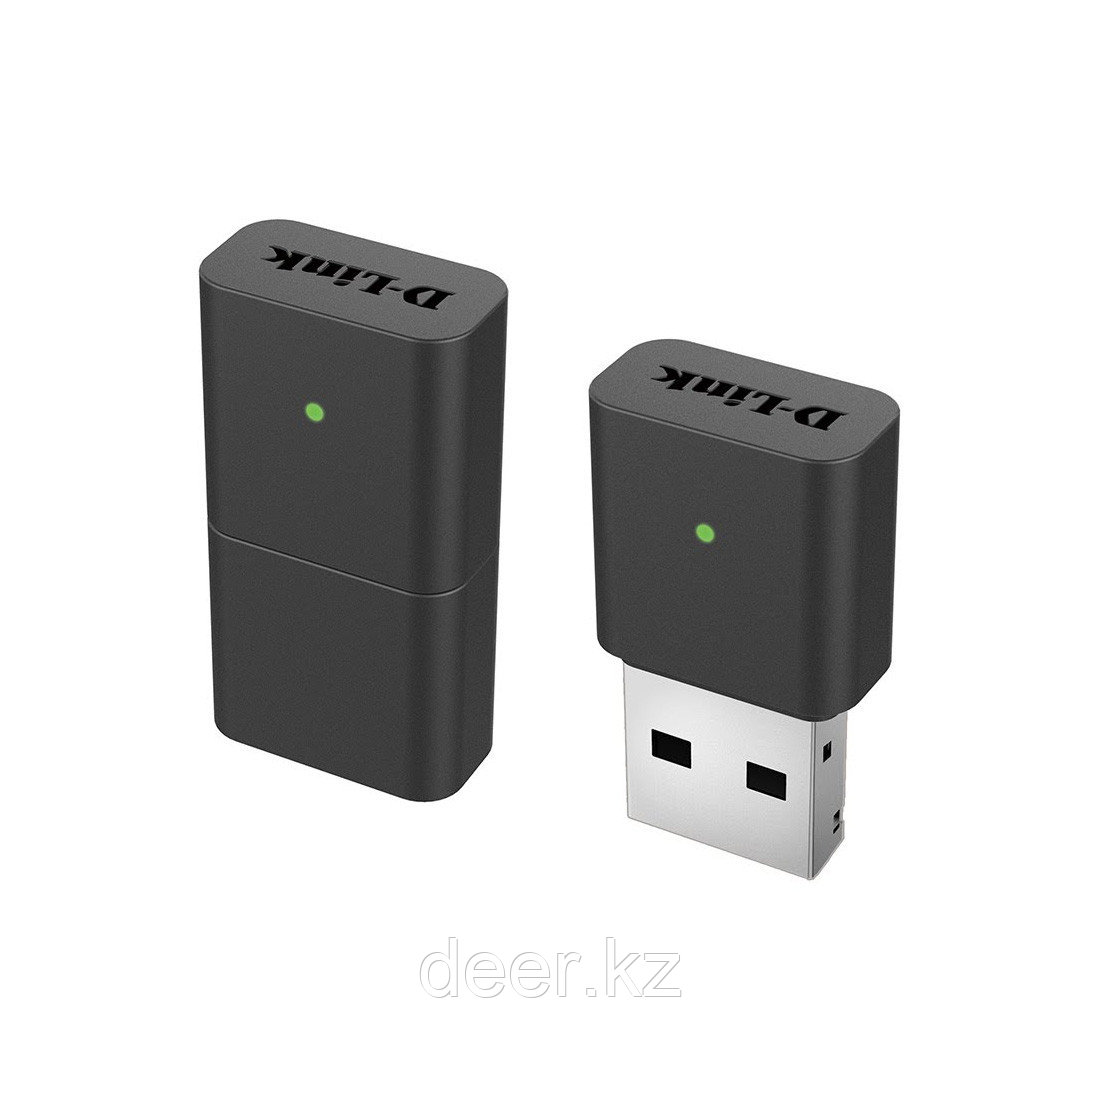 D-Link DWA-131/E1A Беспроводной USB-адаптер N300